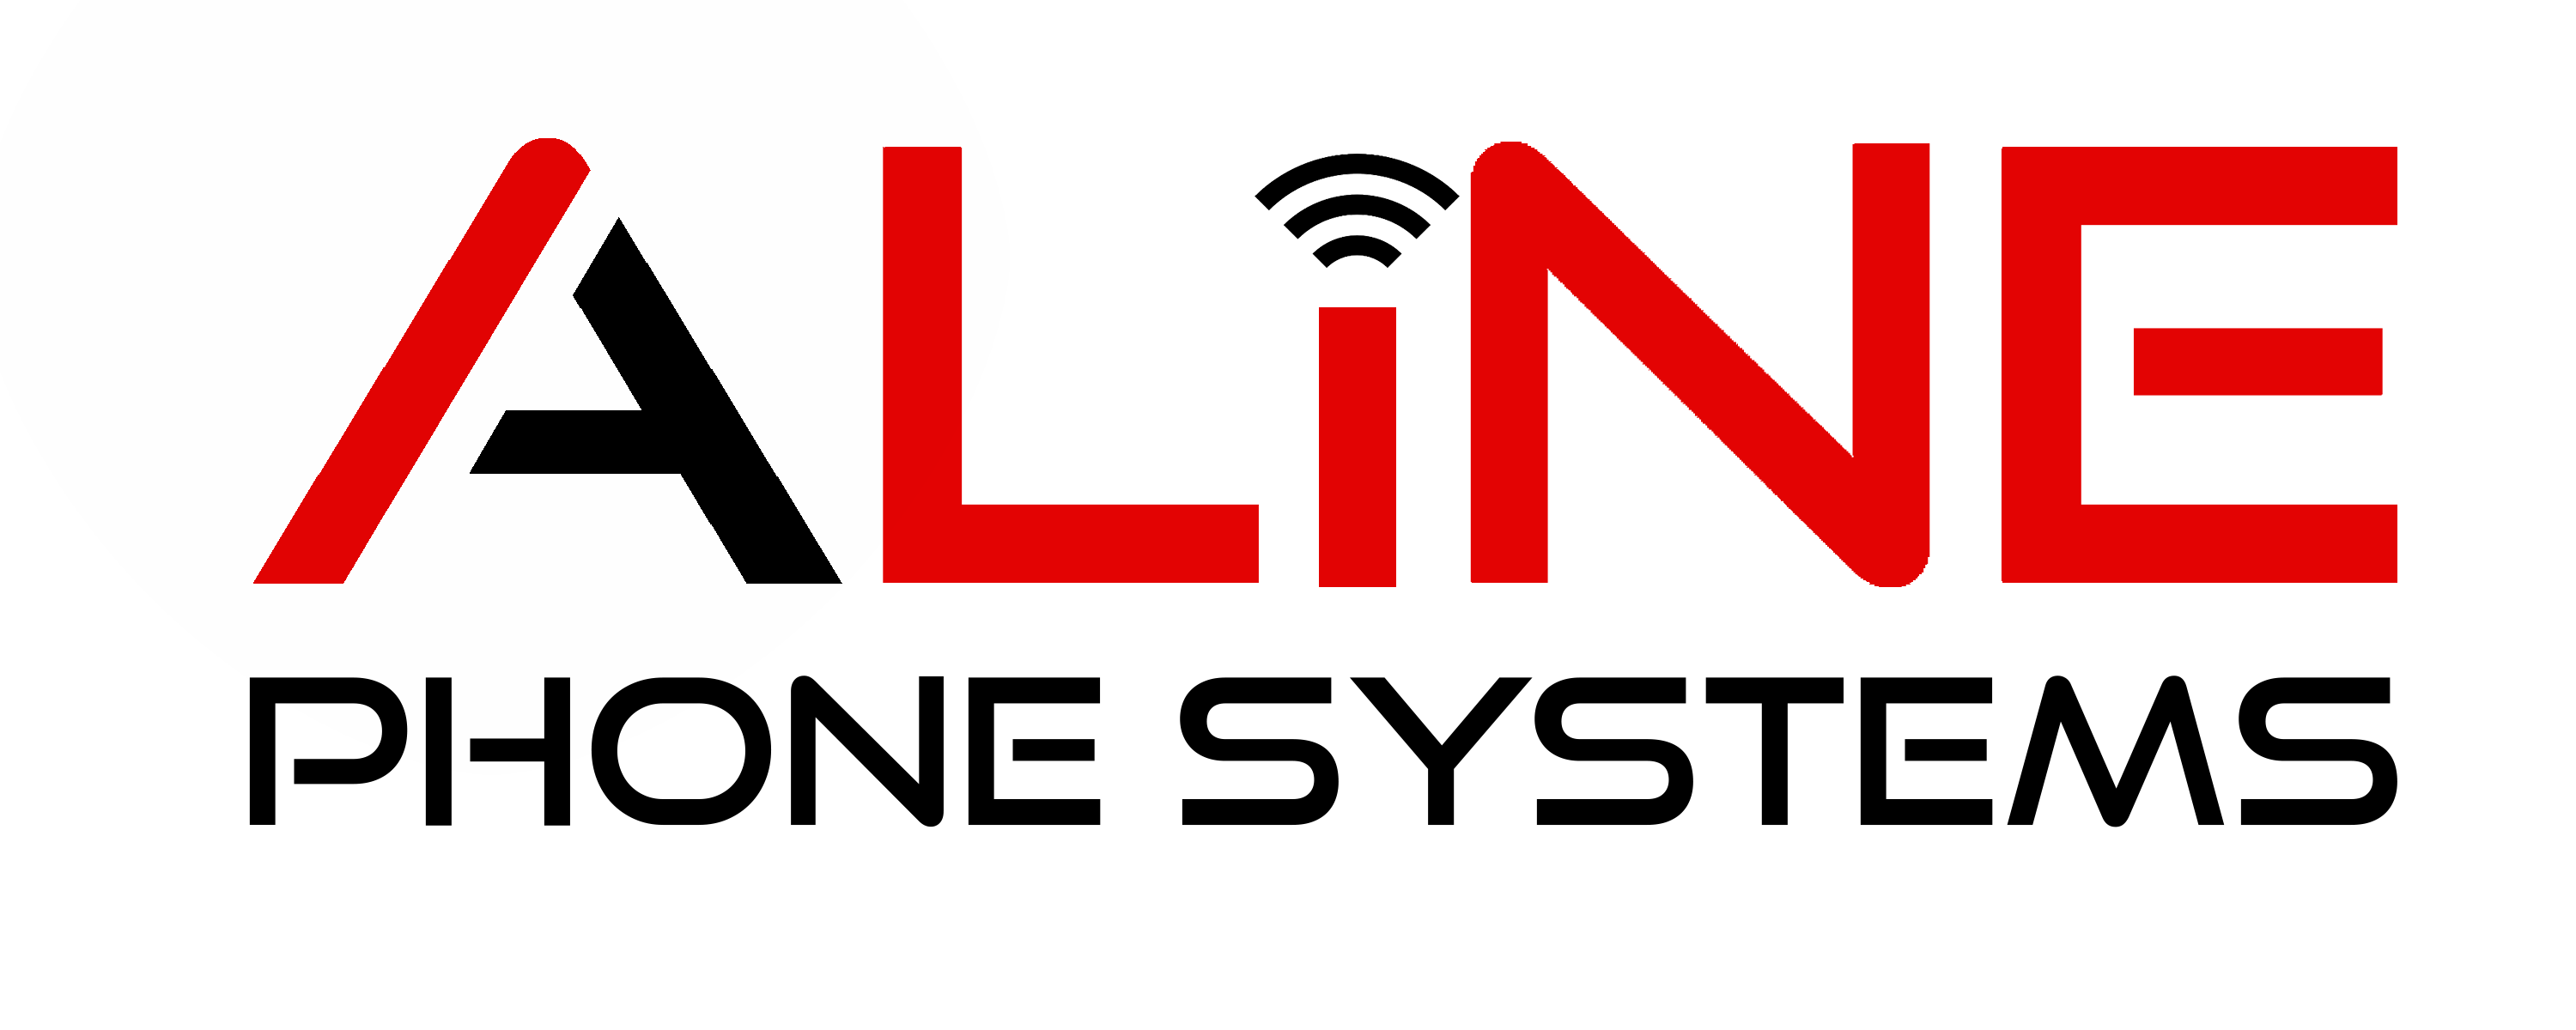 Aline phone systems logo